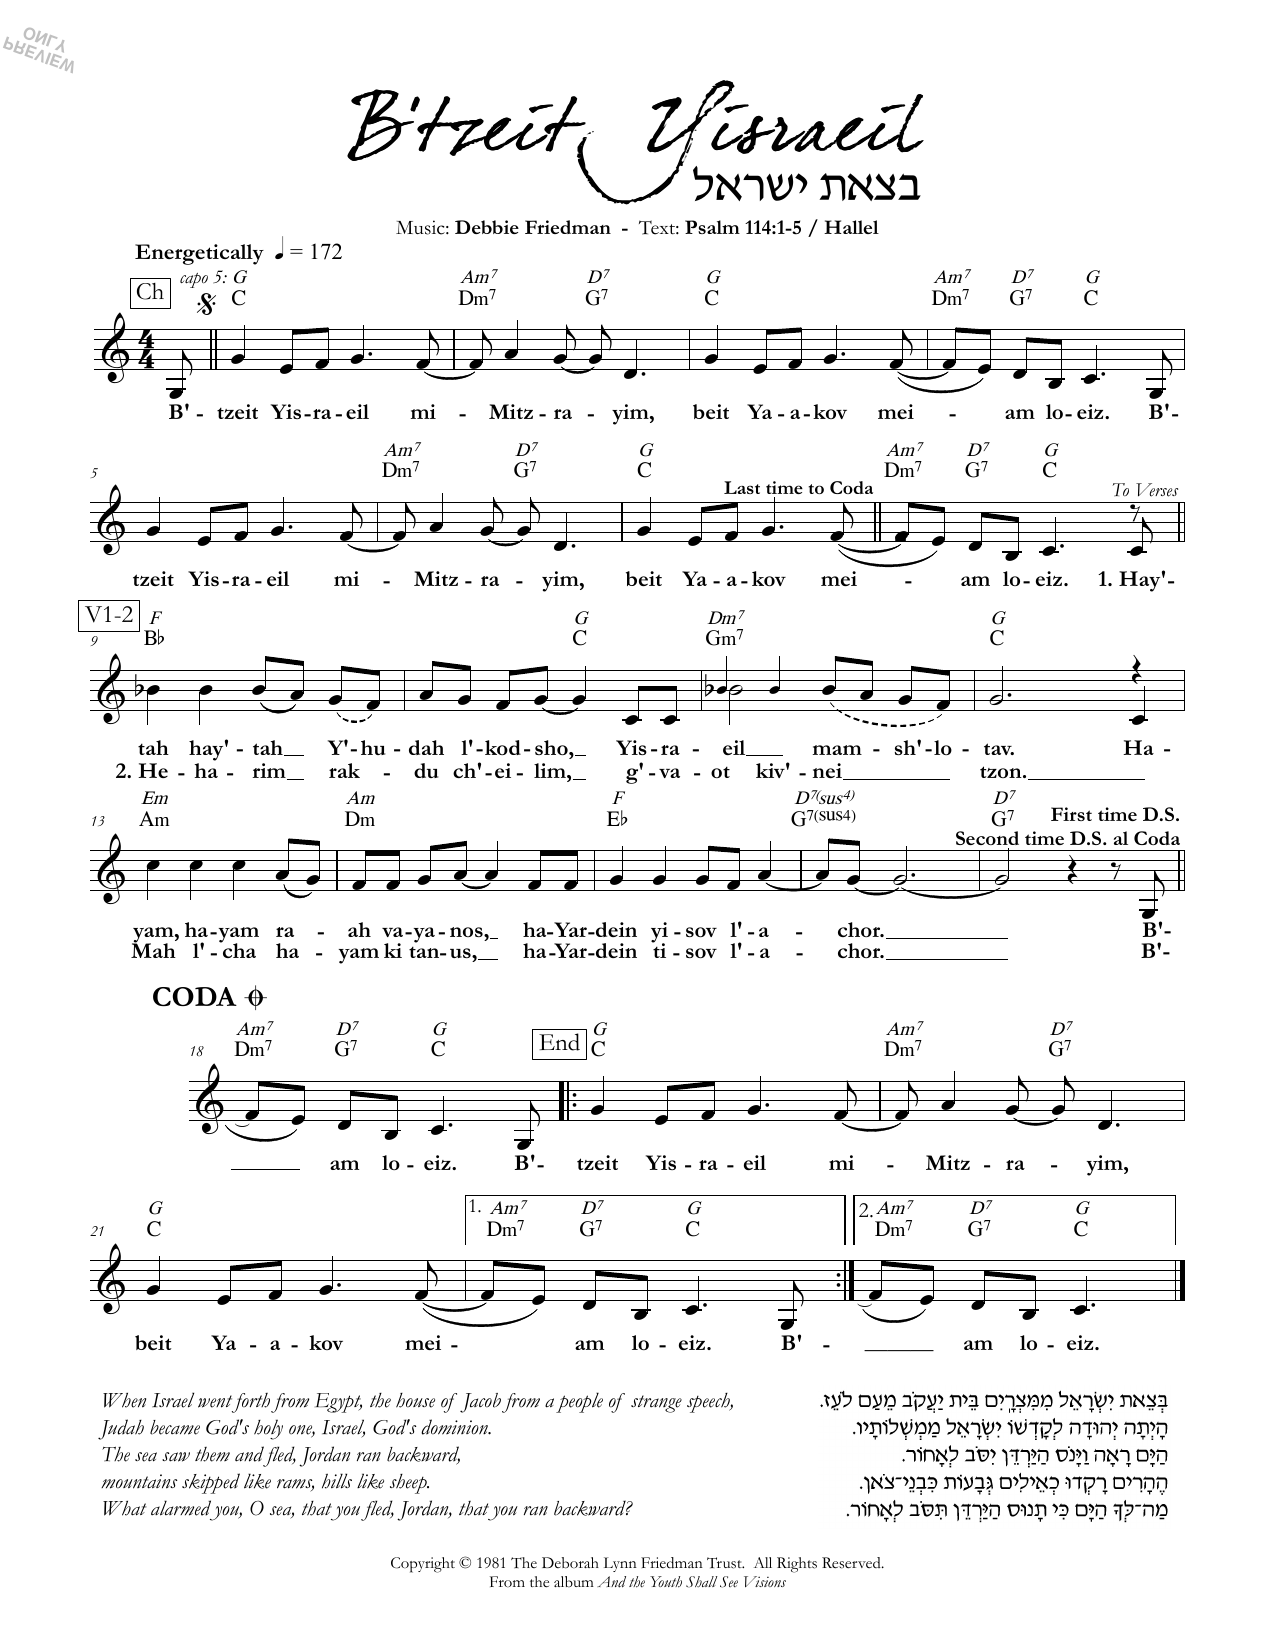 Debbie Friedman B'tzeit Yisraeil sheet music notes and chords arranged for Lead Sheet / Fake Book